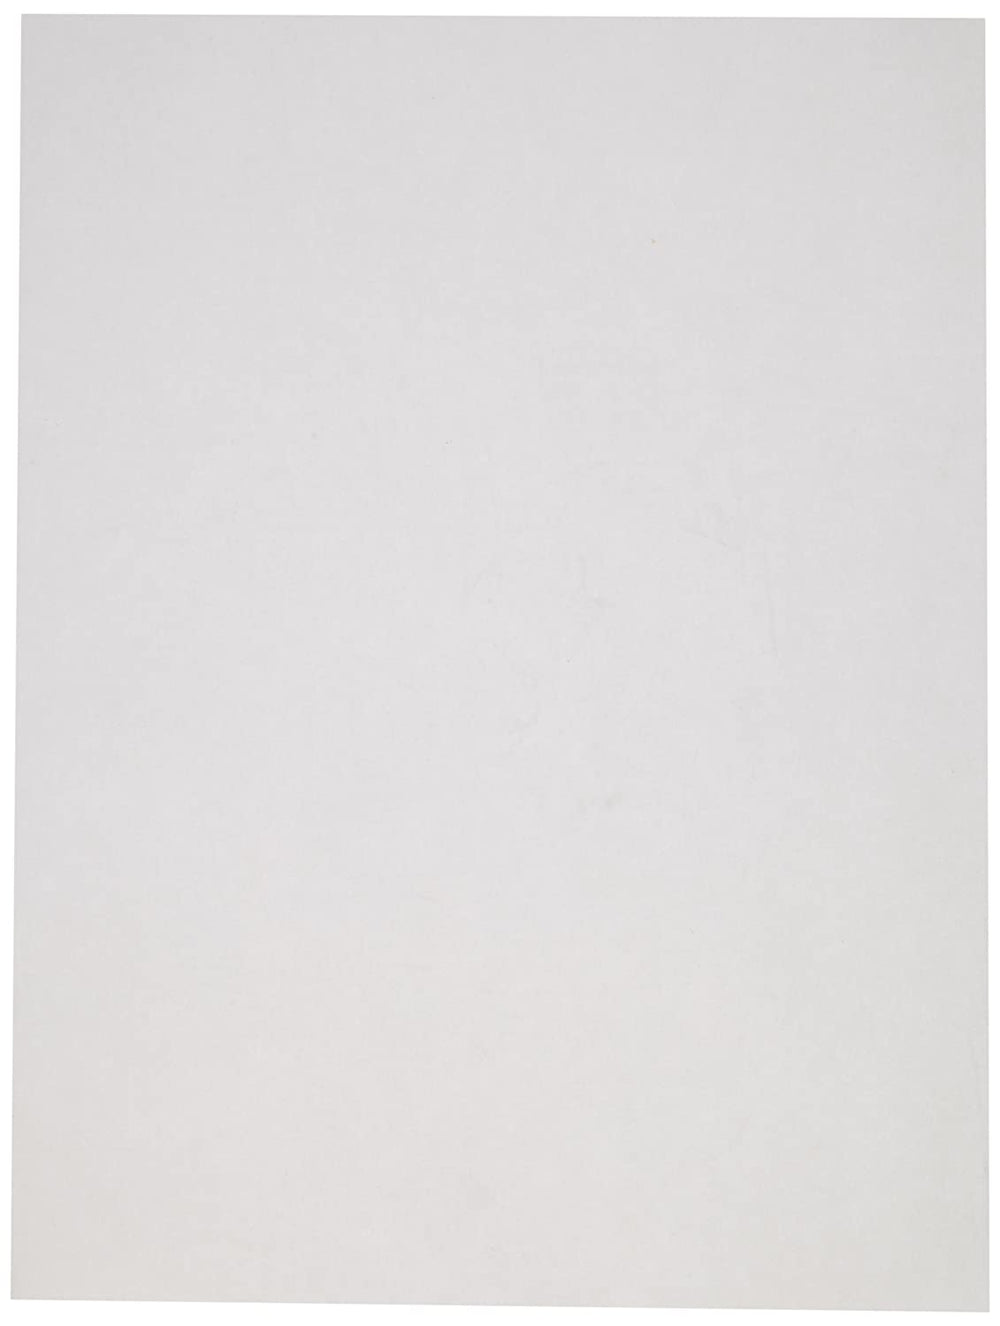 Sax - Papel de dibujo - 60 Libras – 9 x 12 pulgadas, 500 hojas, color blanco - Arteztik